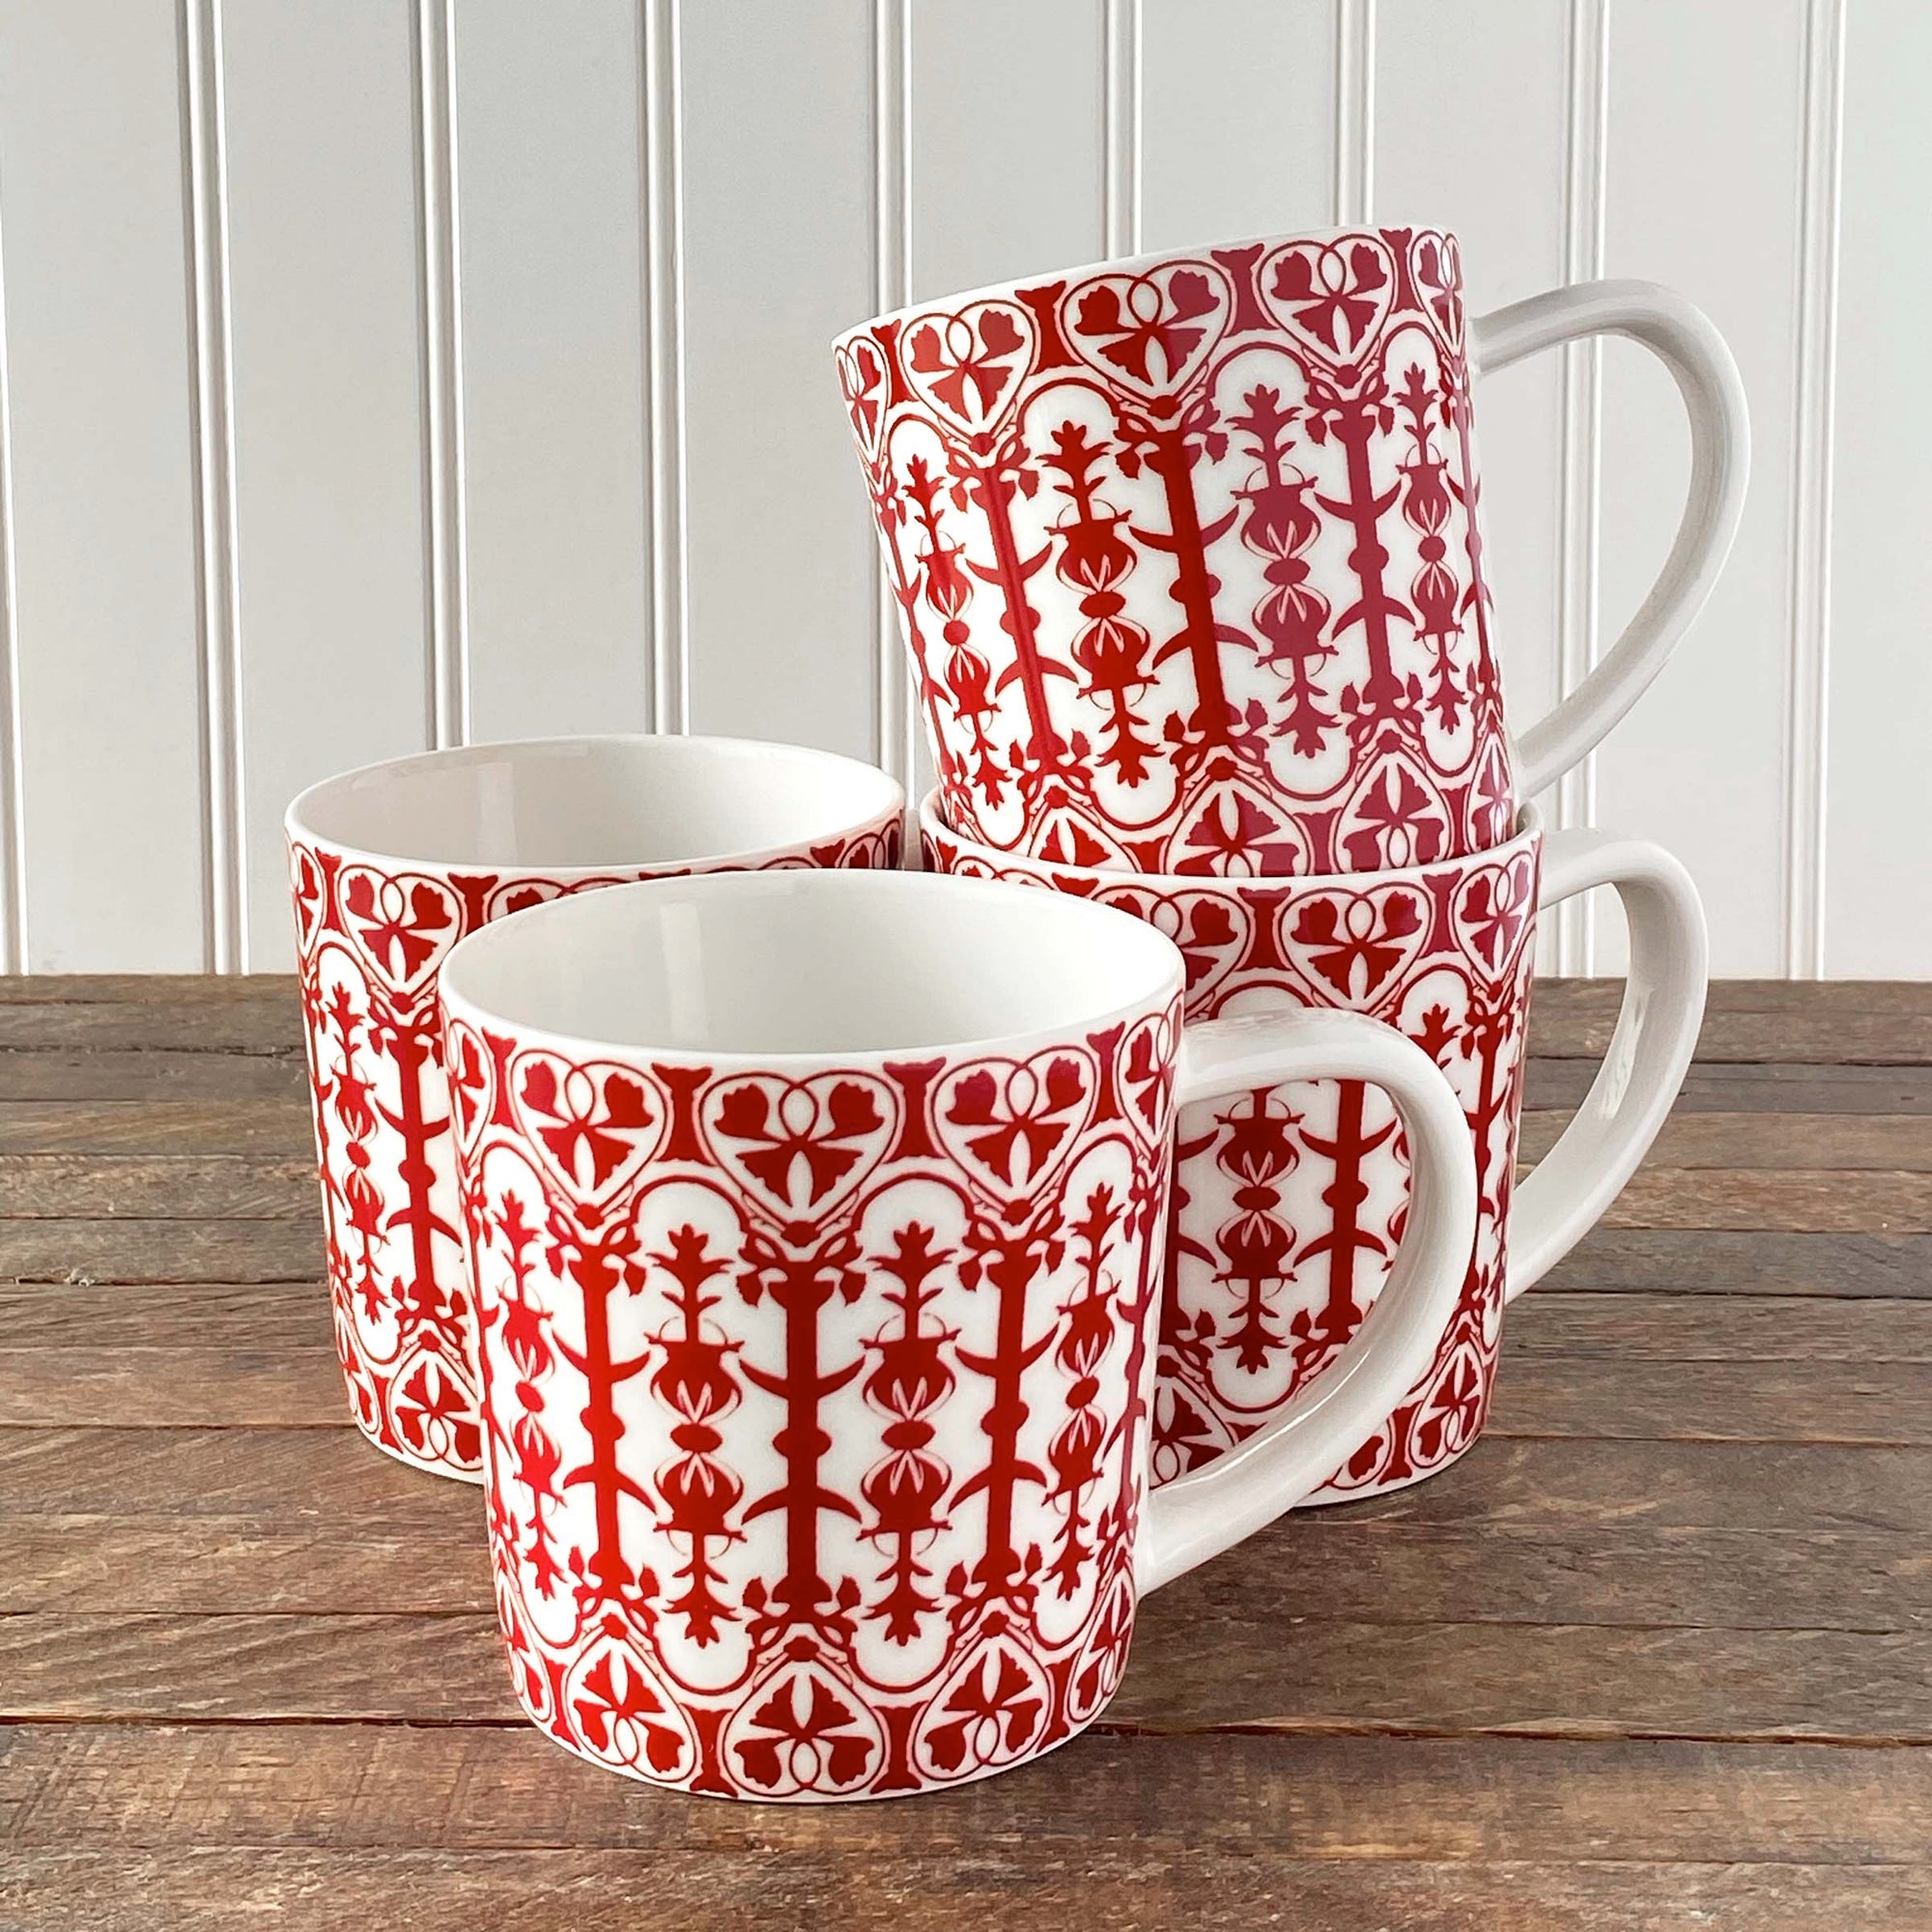 Casablanca Crimson high-fired Porcelain mug in red and white from Caskata